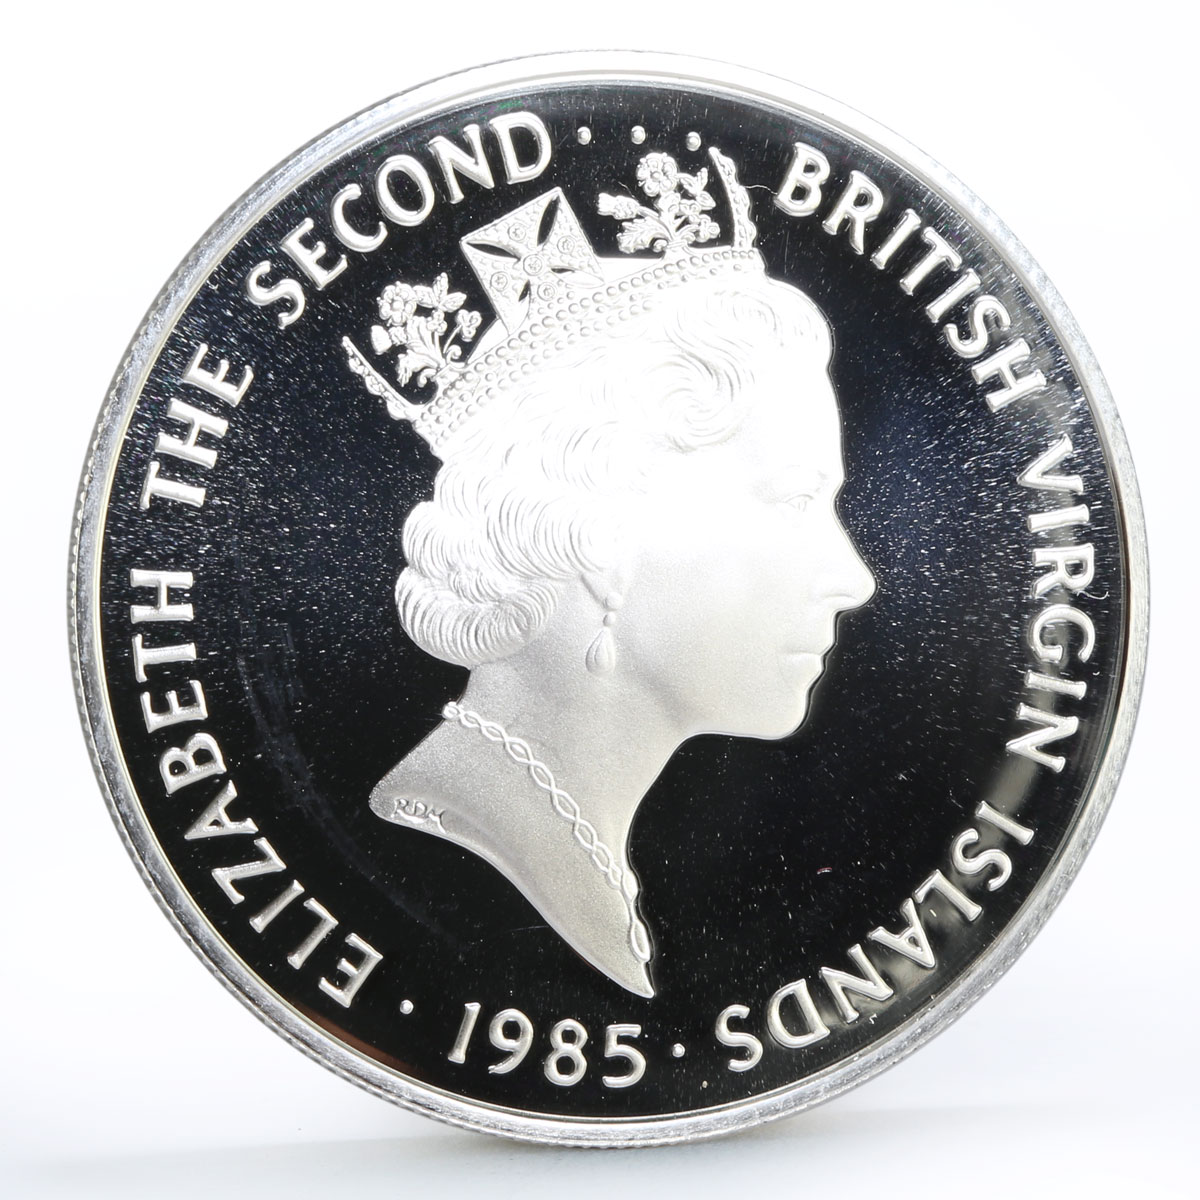 British Virgin Islands 20 dollars Caribbean Treasures Anchor silver coin 1985